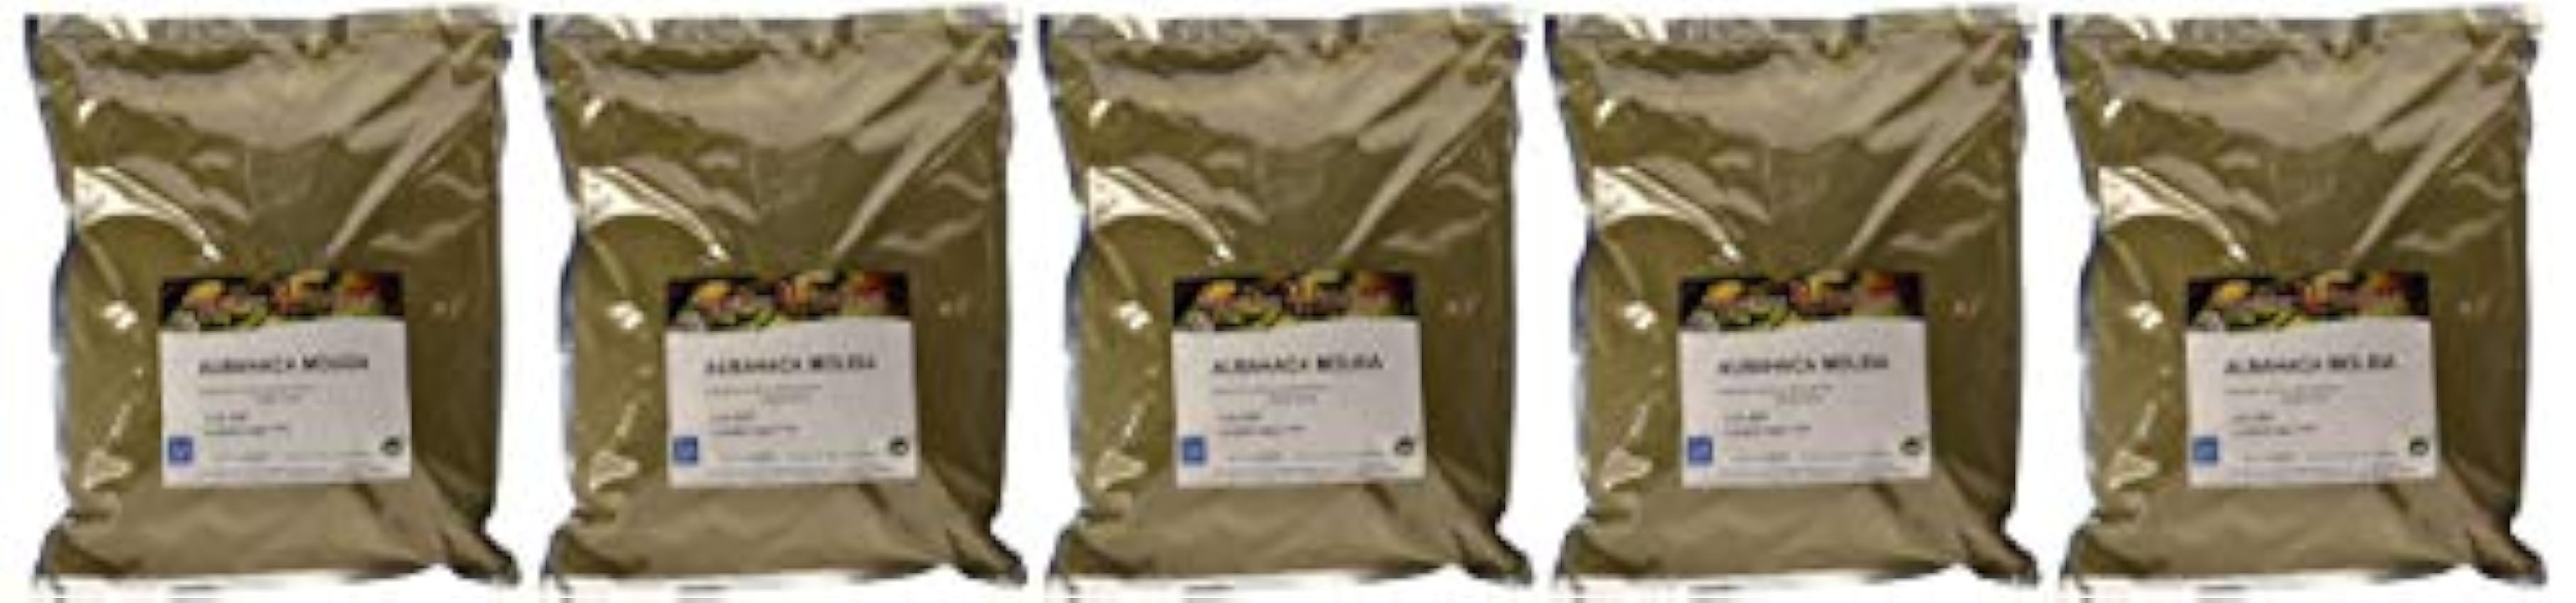 Especias Pedroza Albahaca Molida - Paquete de 5 x 1000 gr - Total: 5000 gr 7OvhGQFC